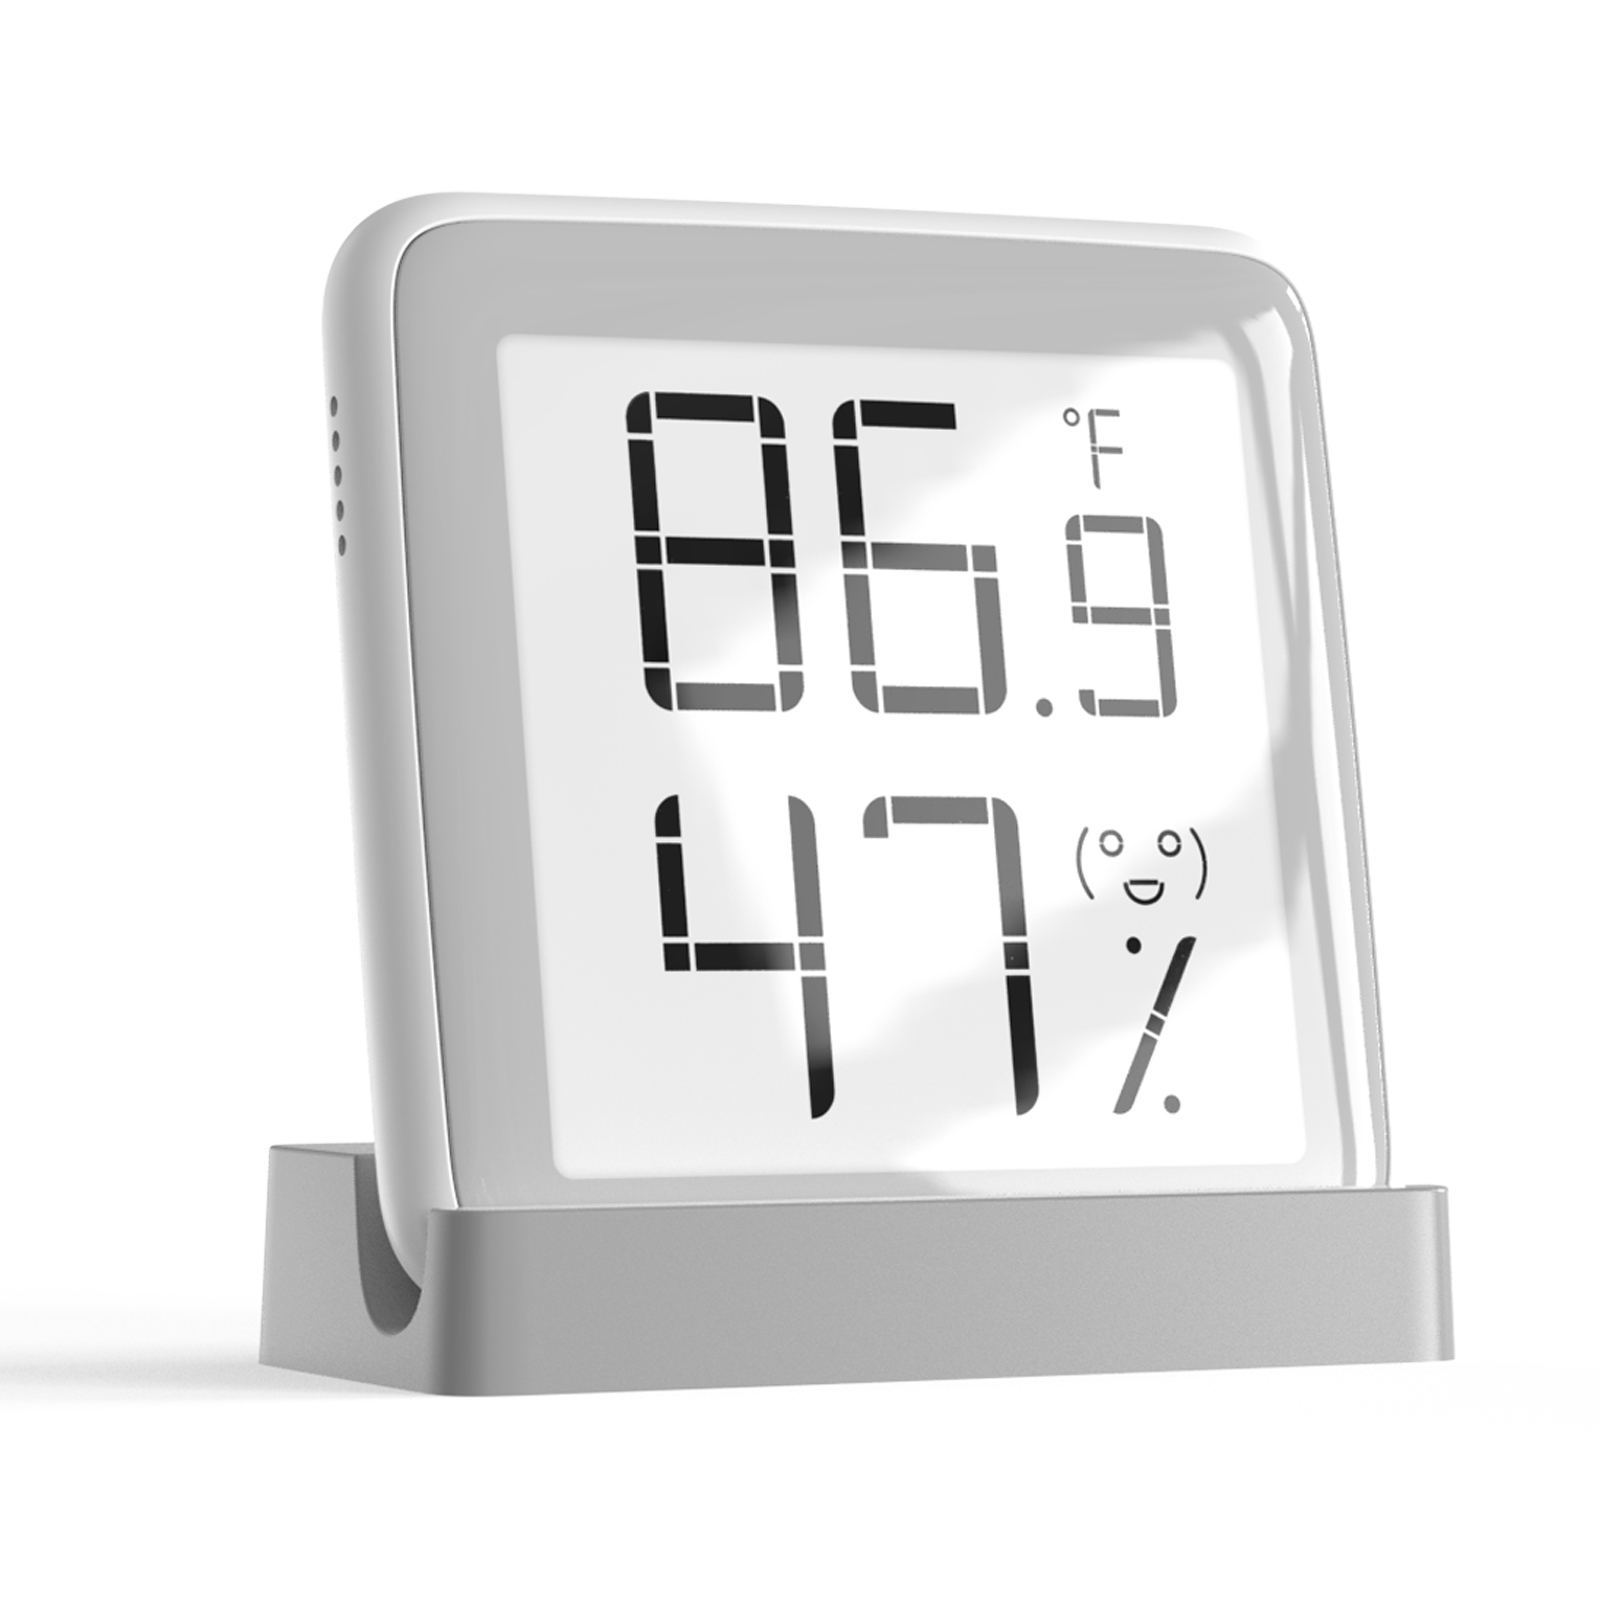 LCD Digital Thermometer Feuchtigkeitsmesser Hygrometer Wecker K3E0 8U0J 7Y9O 